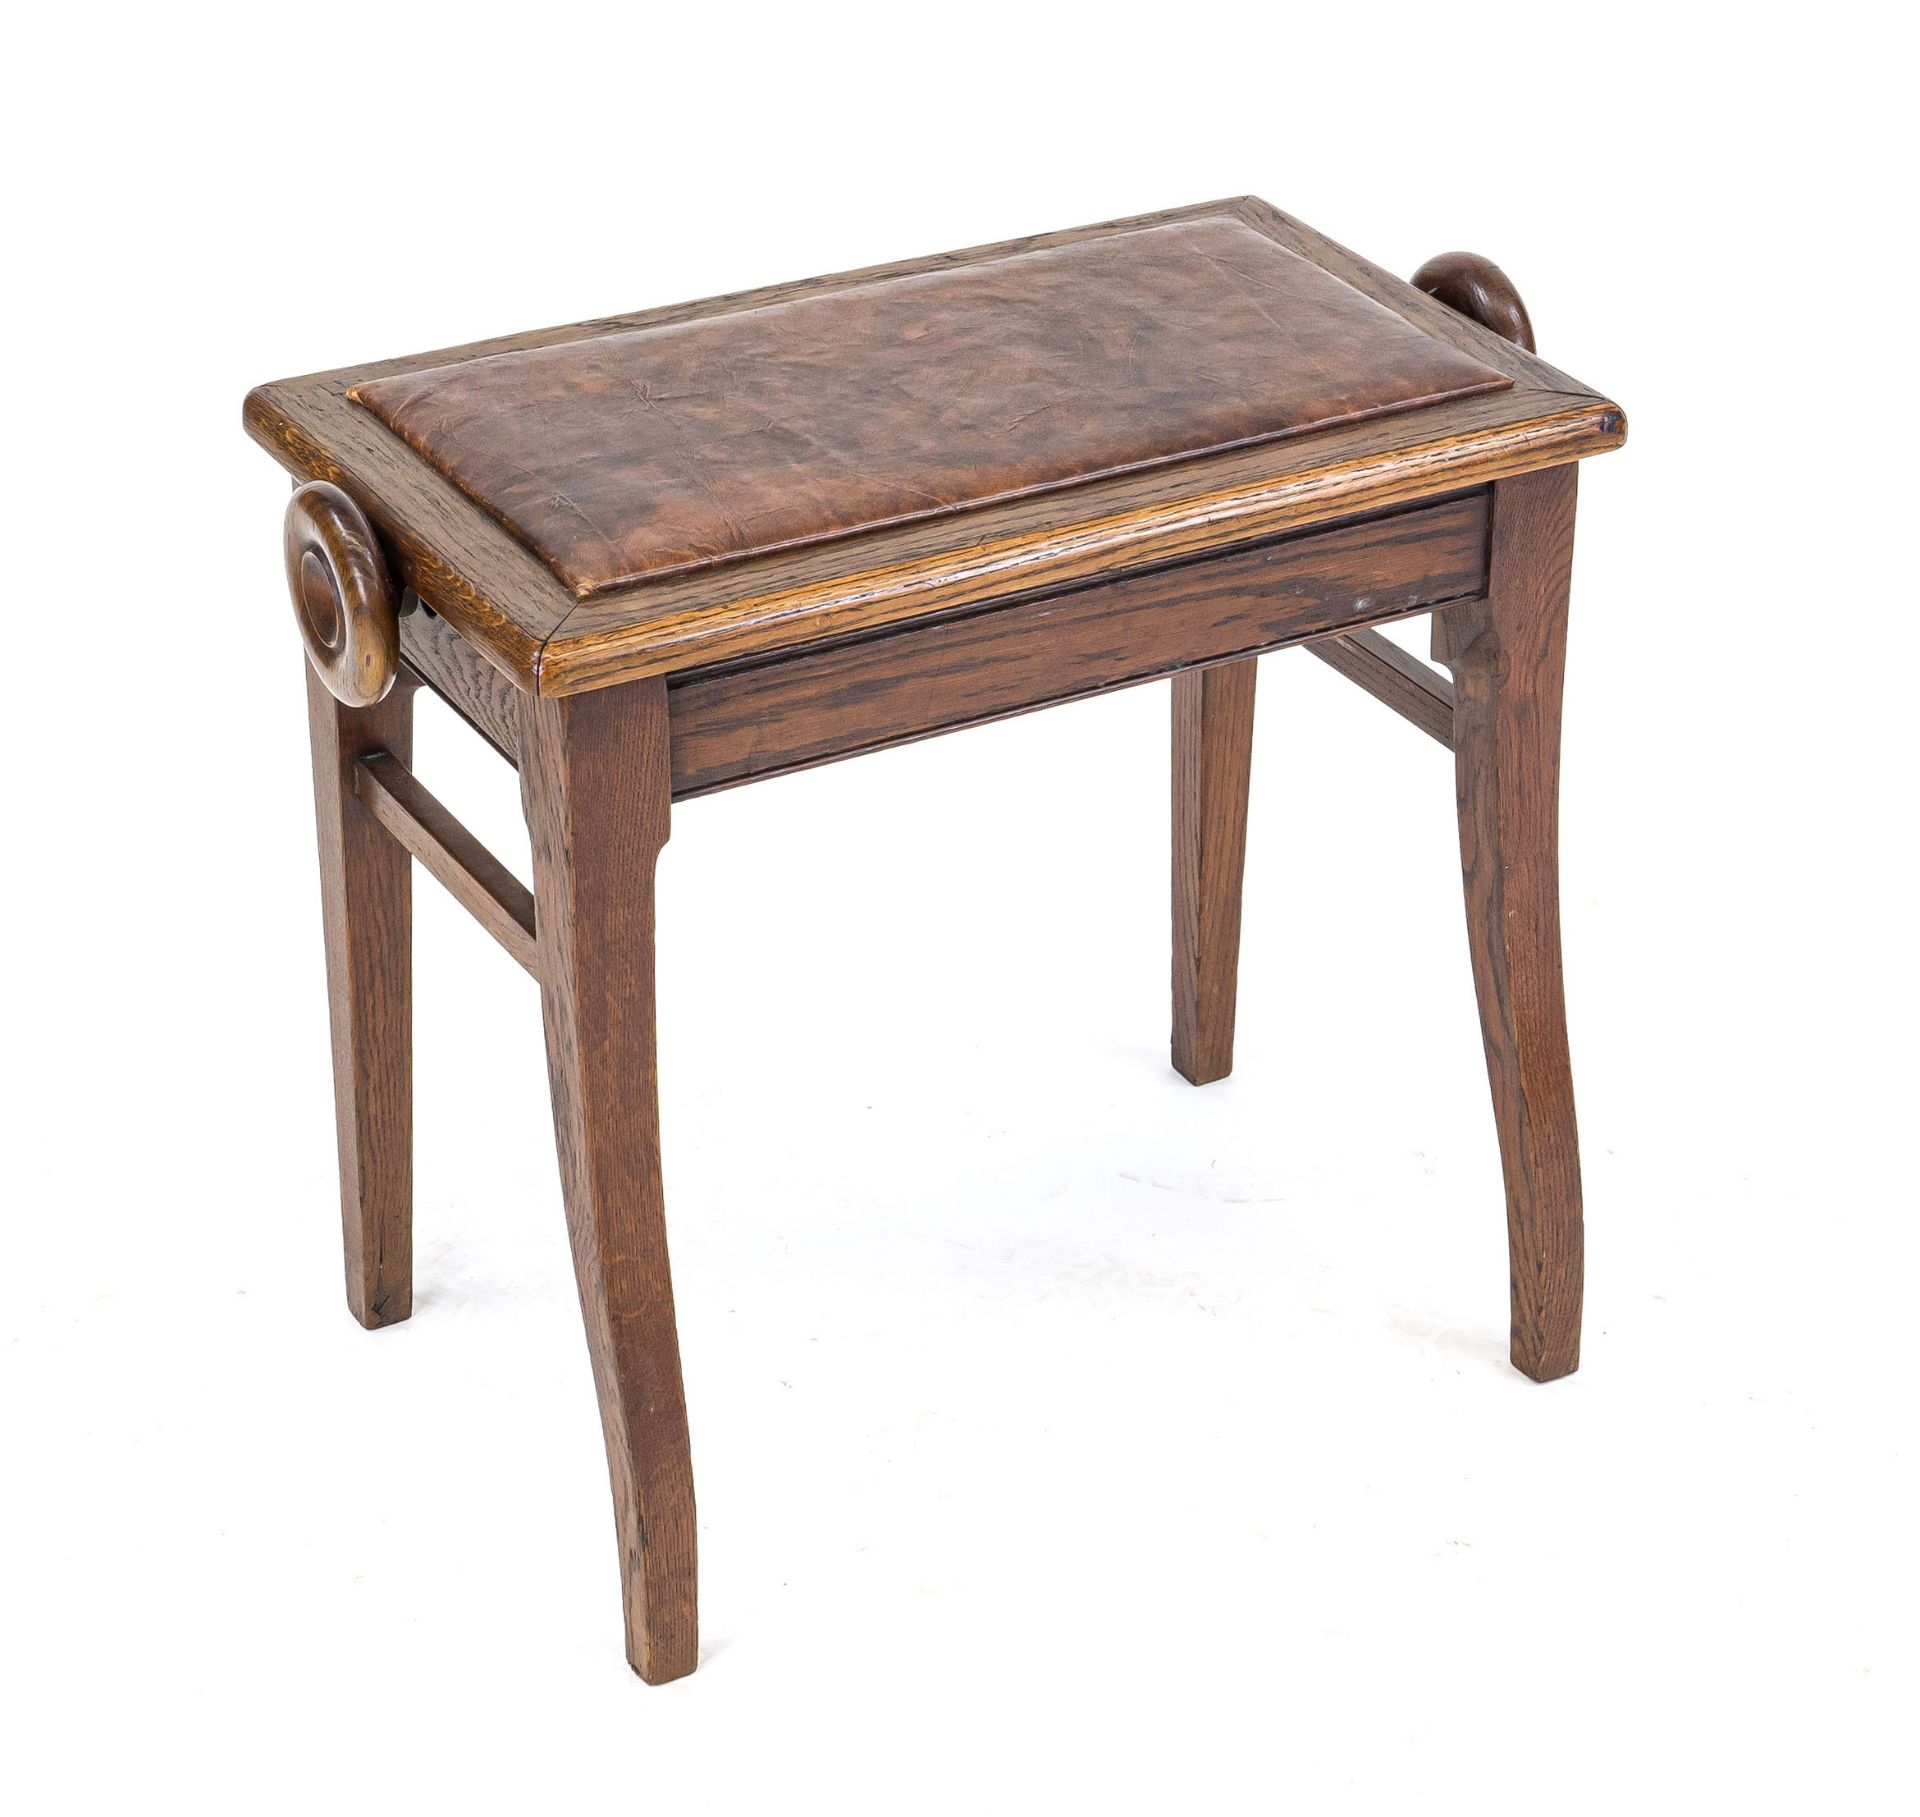 Piano stool, c. 1900, oak, height-adjustable seat, 51 x 60 x 33 cm